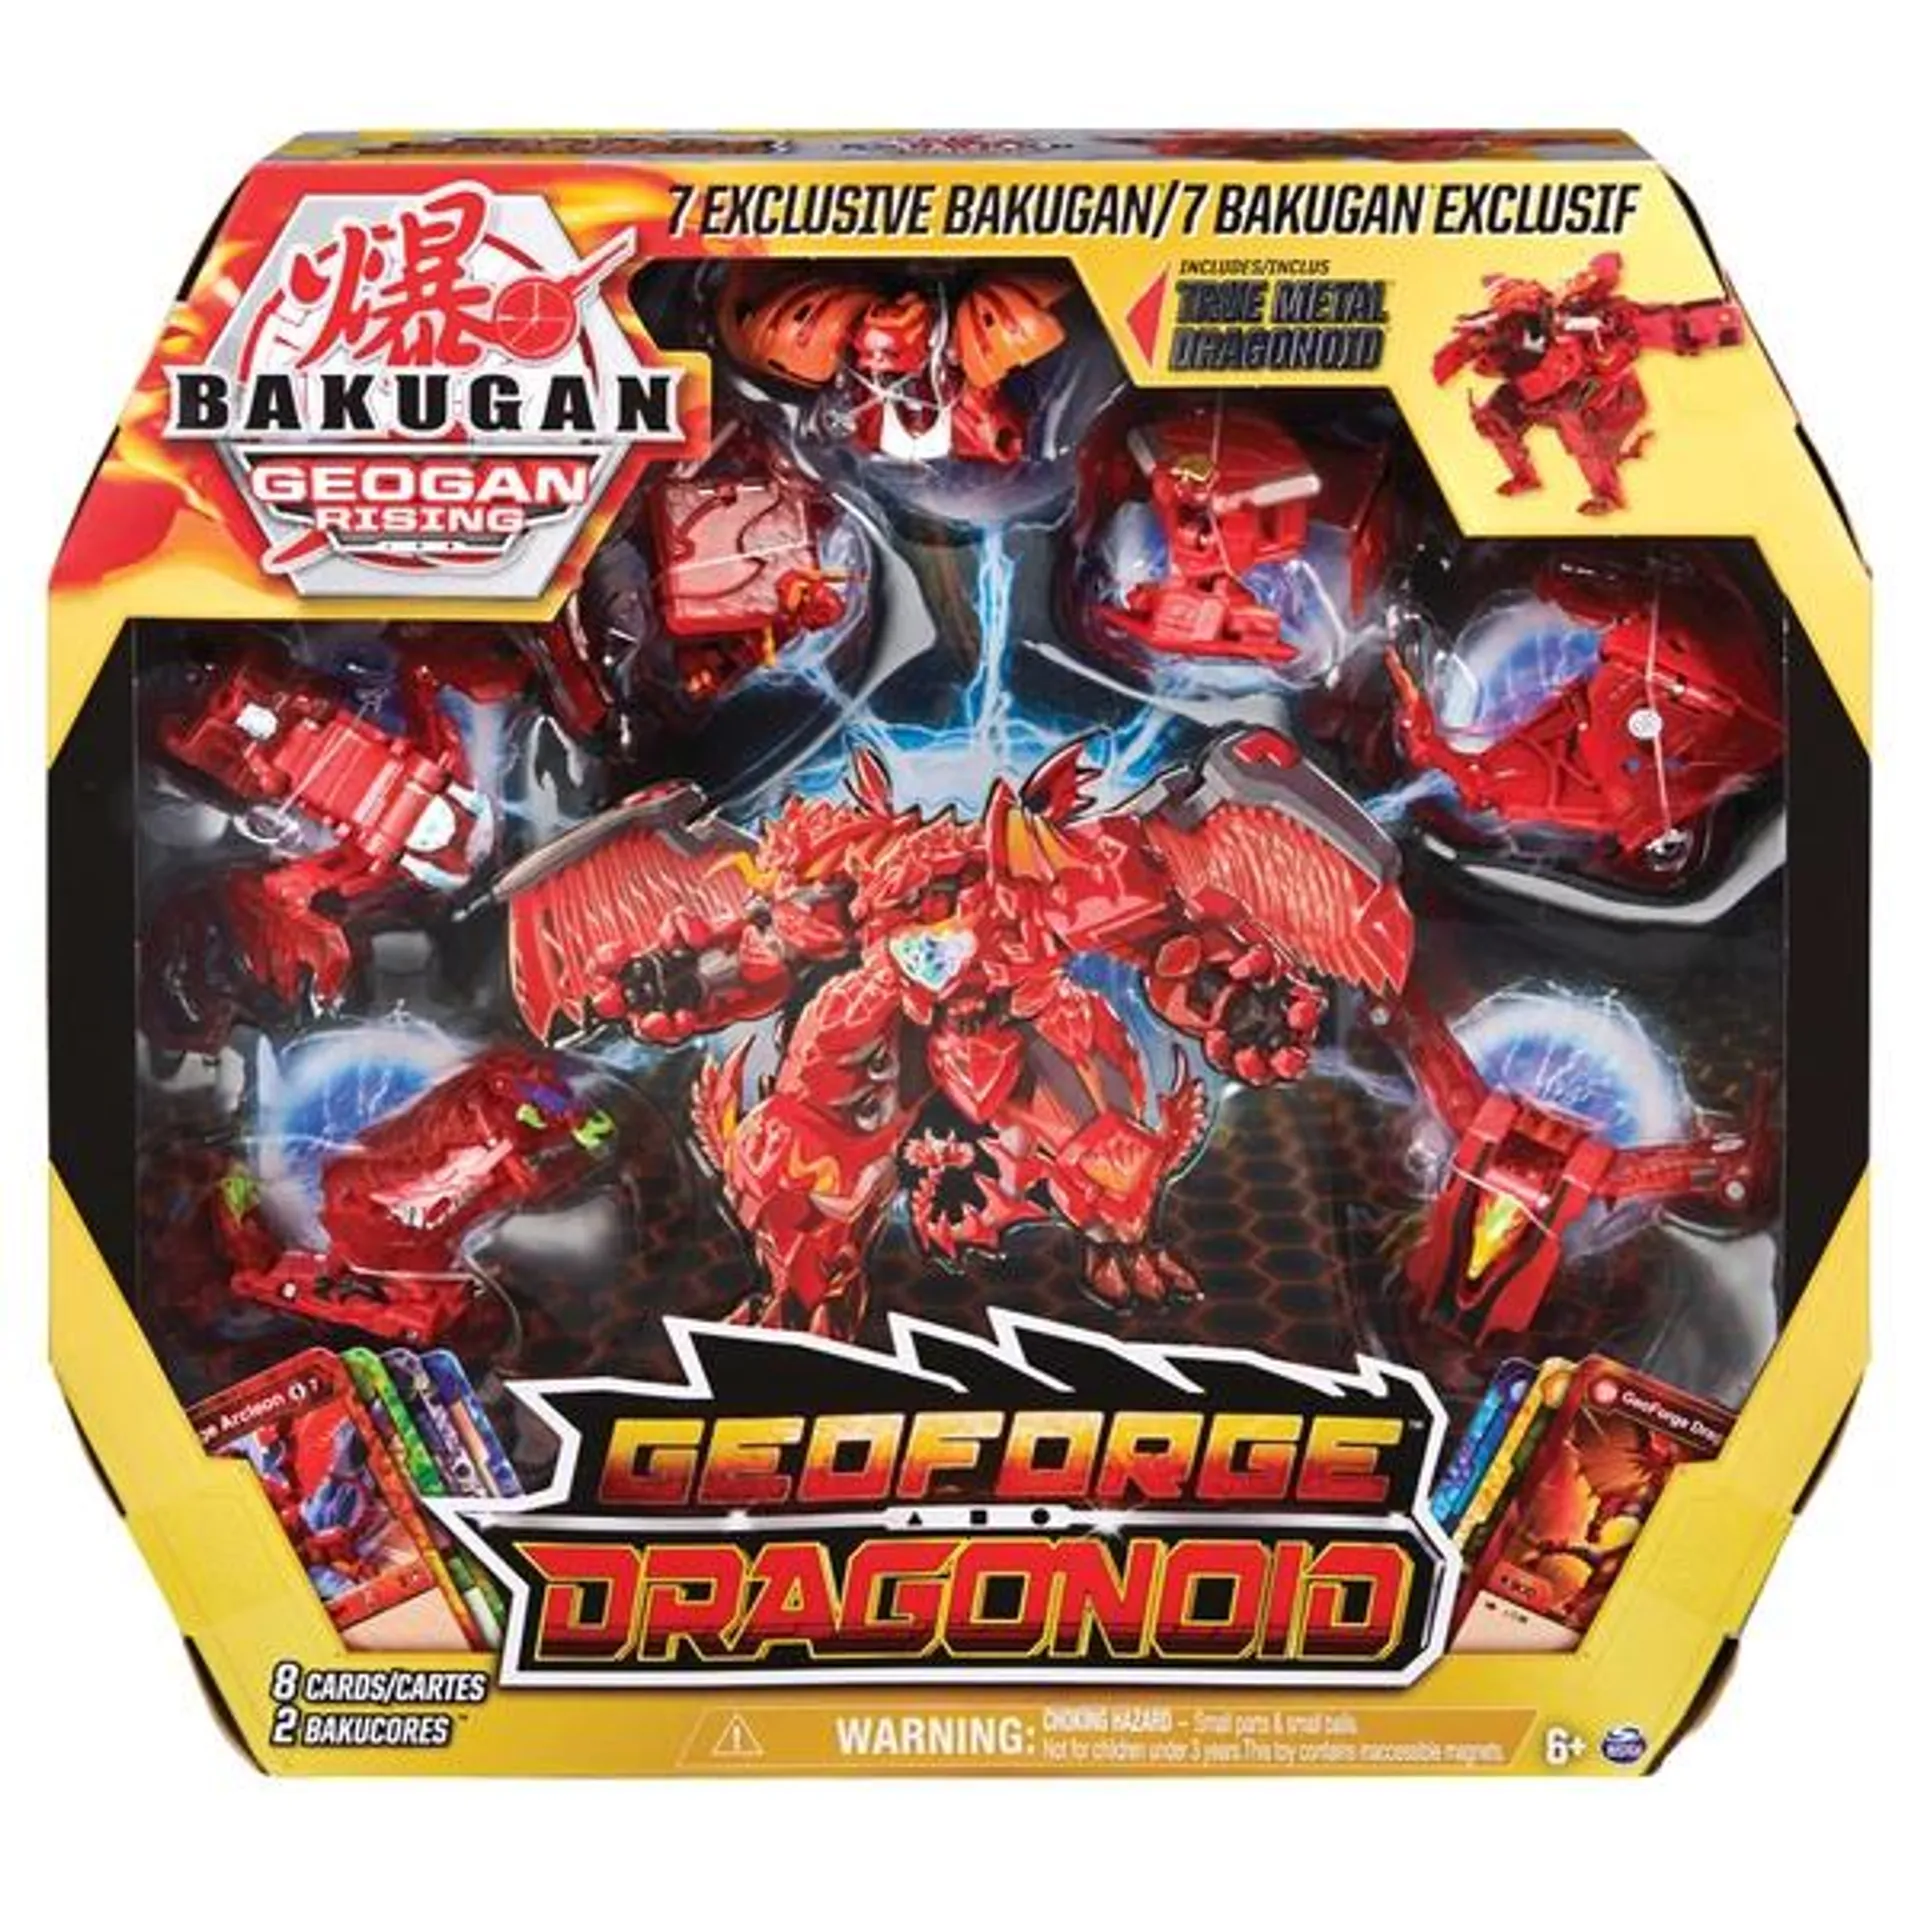 Bakugan GeoForge Dragonoid, 7-in-1 Exclusive True Metal Dragonoid and 6 Geogan Bakugan Coll